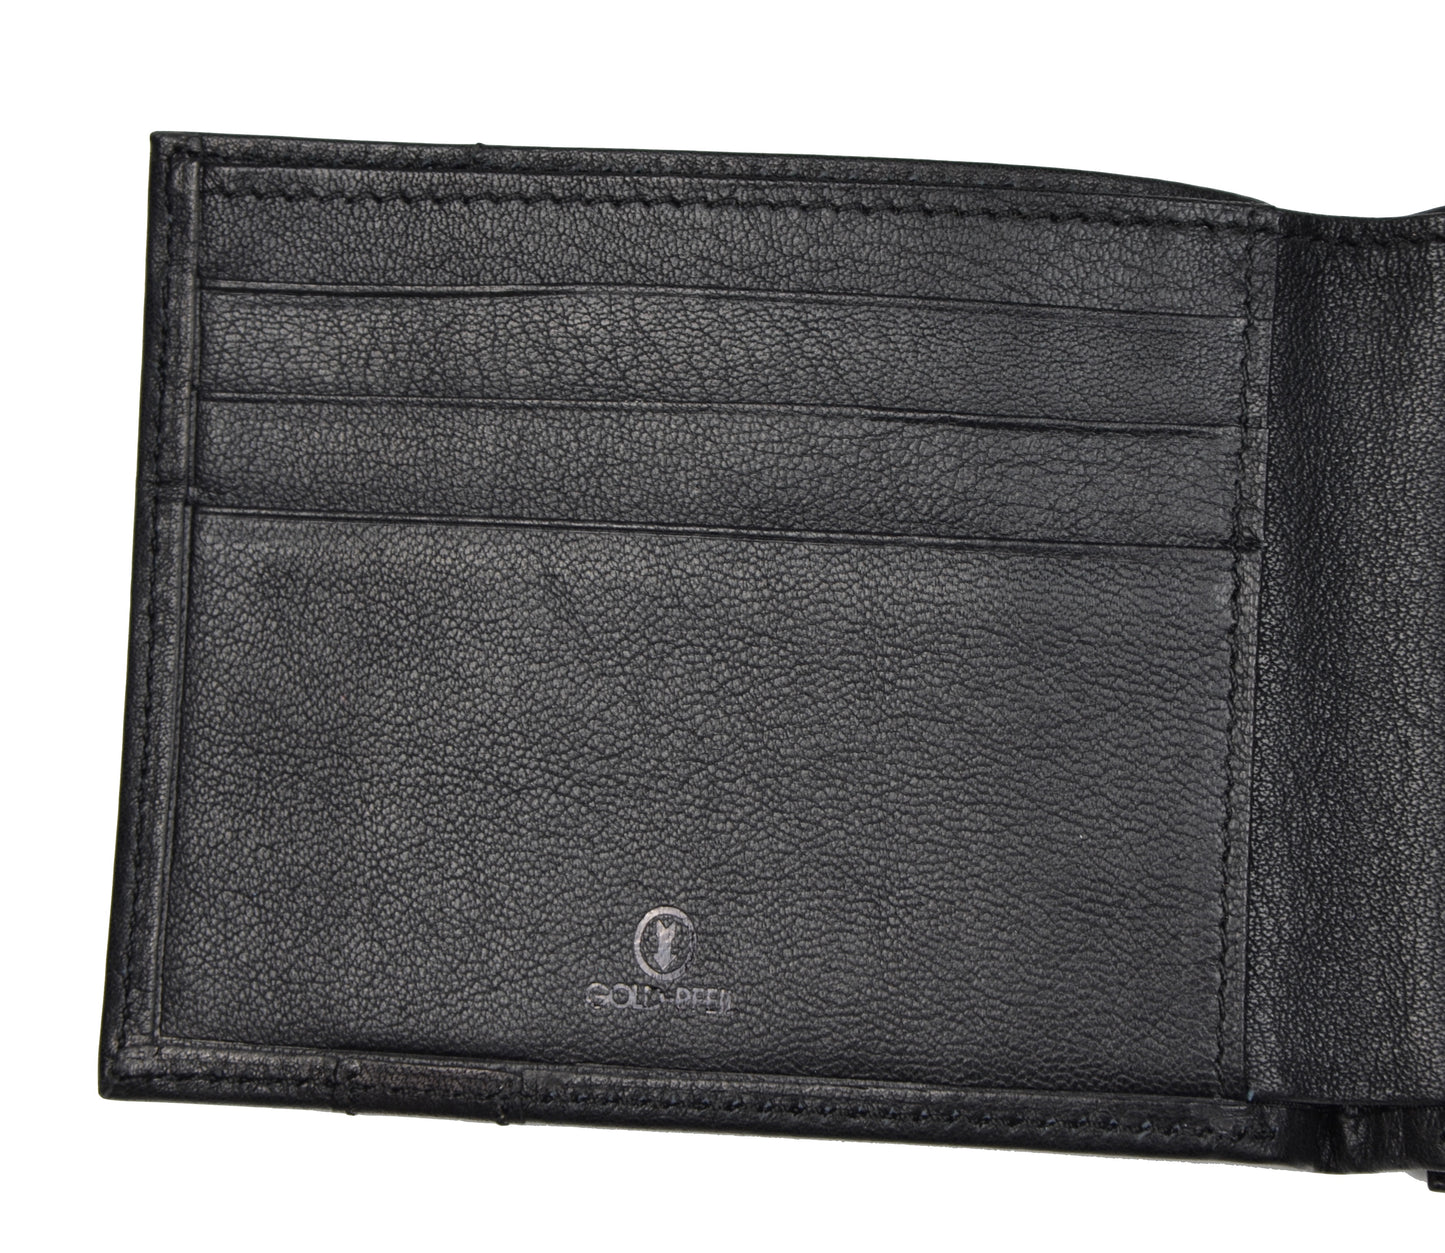 Goldpfeil Double-Sided Leather Wallet & Money Clip - Black